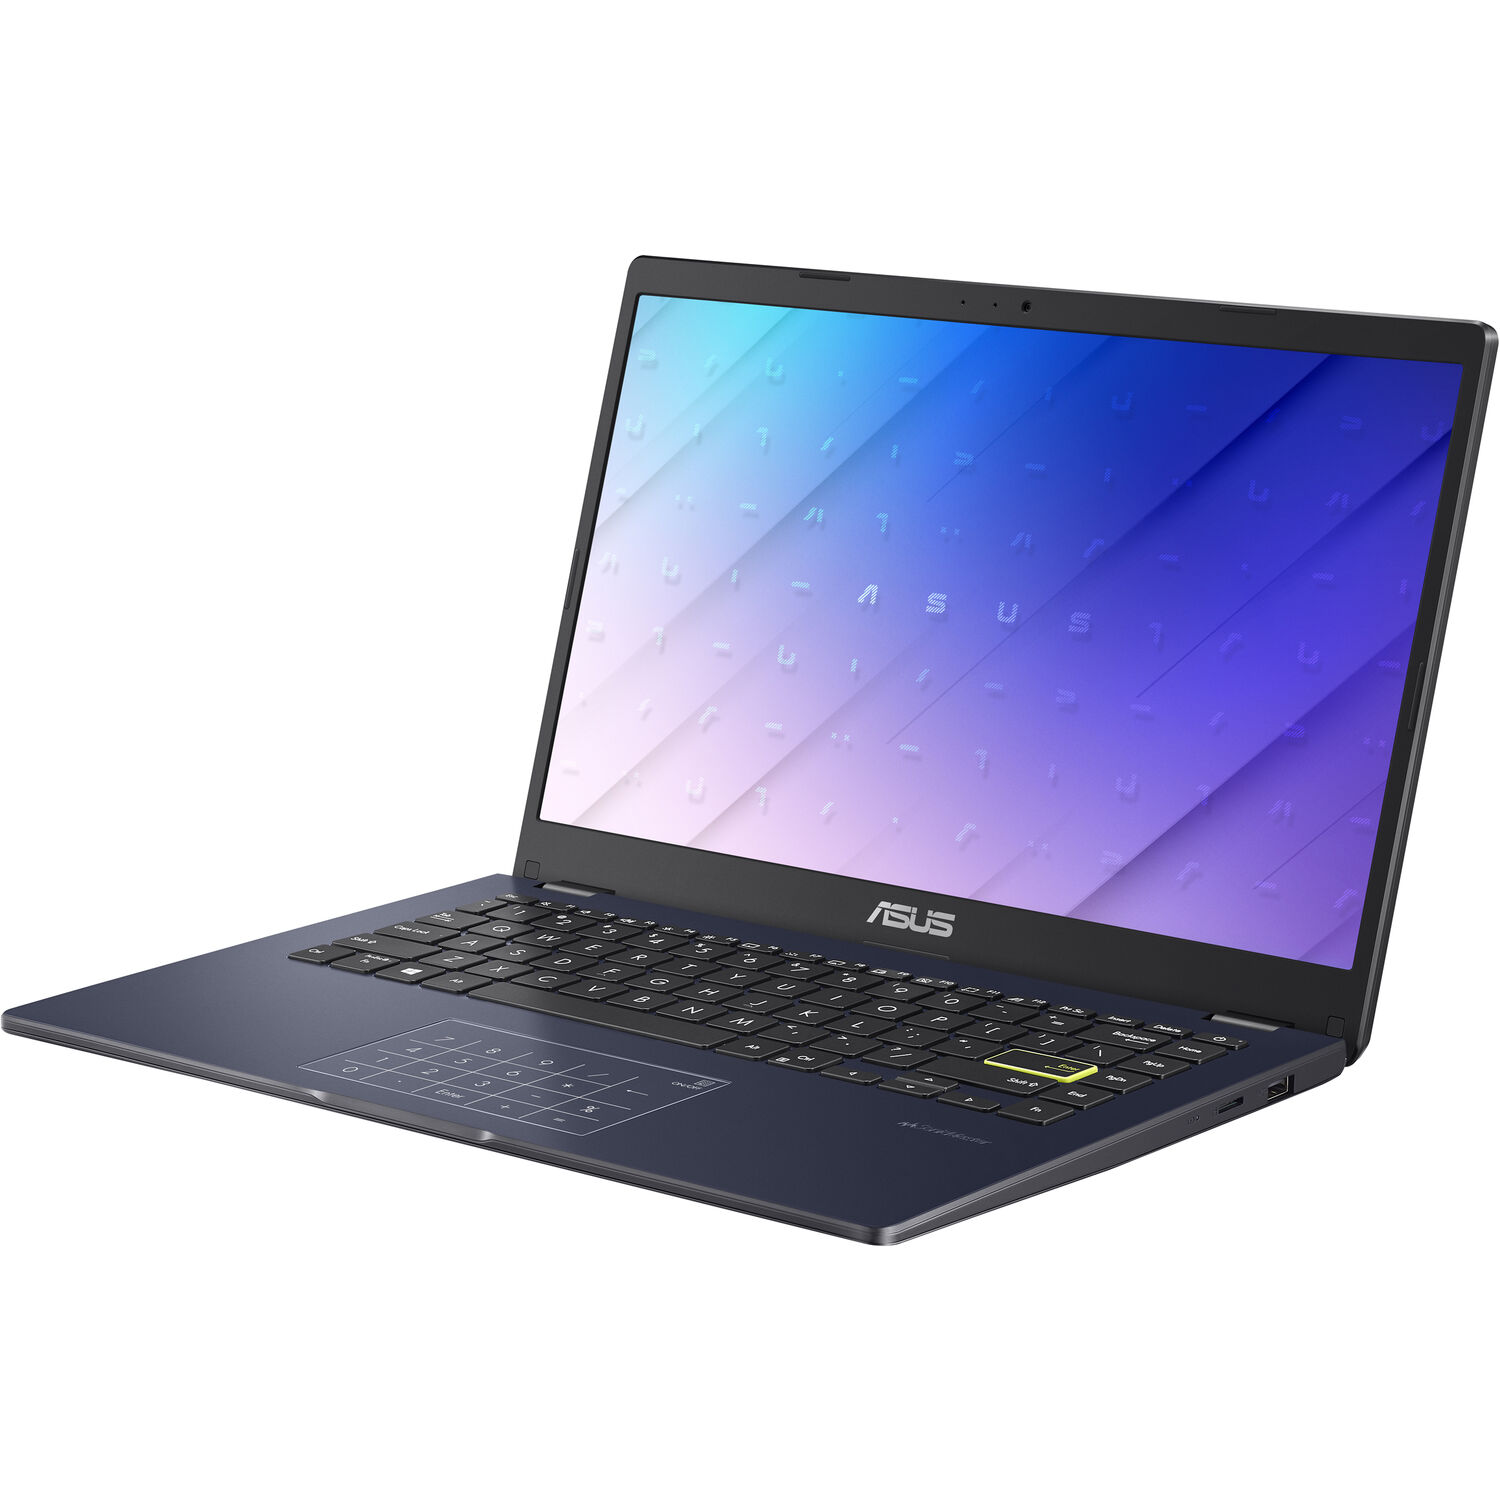 ASUS 14 L410 Everyday Value Laptop (Intel Celeron N4020 2-Core, 4GB RAM, 256GB PCIe SSD, 14.0" Full HD (1920x1080), Intel UHD 600, Wifi, Bluetooth, Webcam, 1xUSB 3.2, 1xHDMI, Win 10 Home) - image 4 of 6